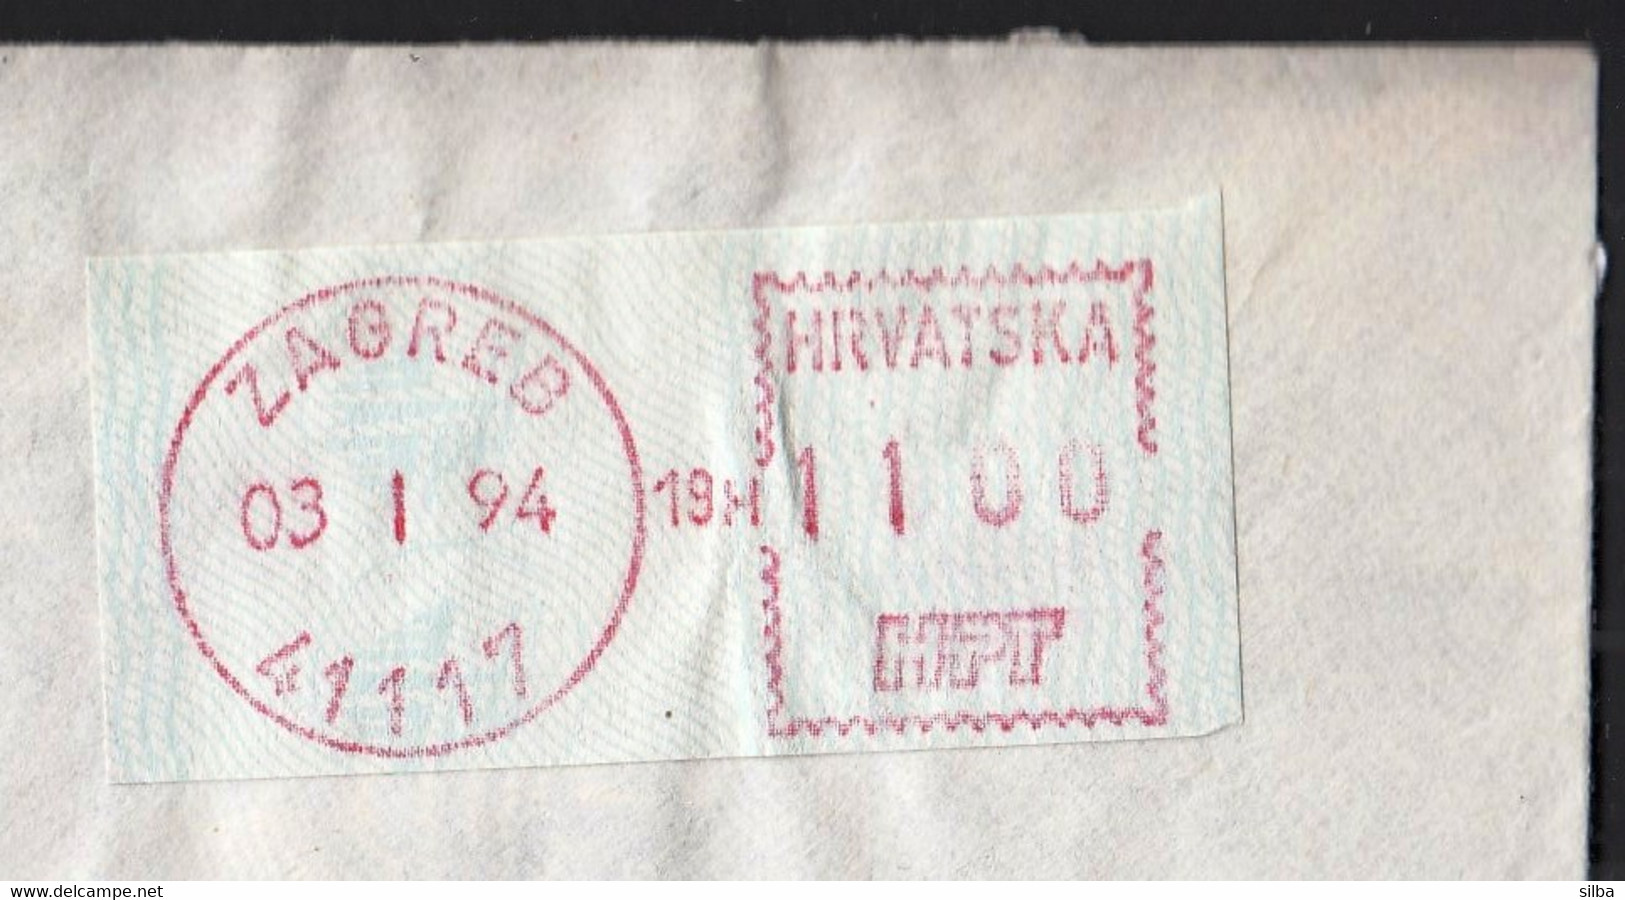 Croatia 1994 / Post Machine Printed Stamp, Label / White Blue-red / Post Office Zagreb 41117 - Croatie